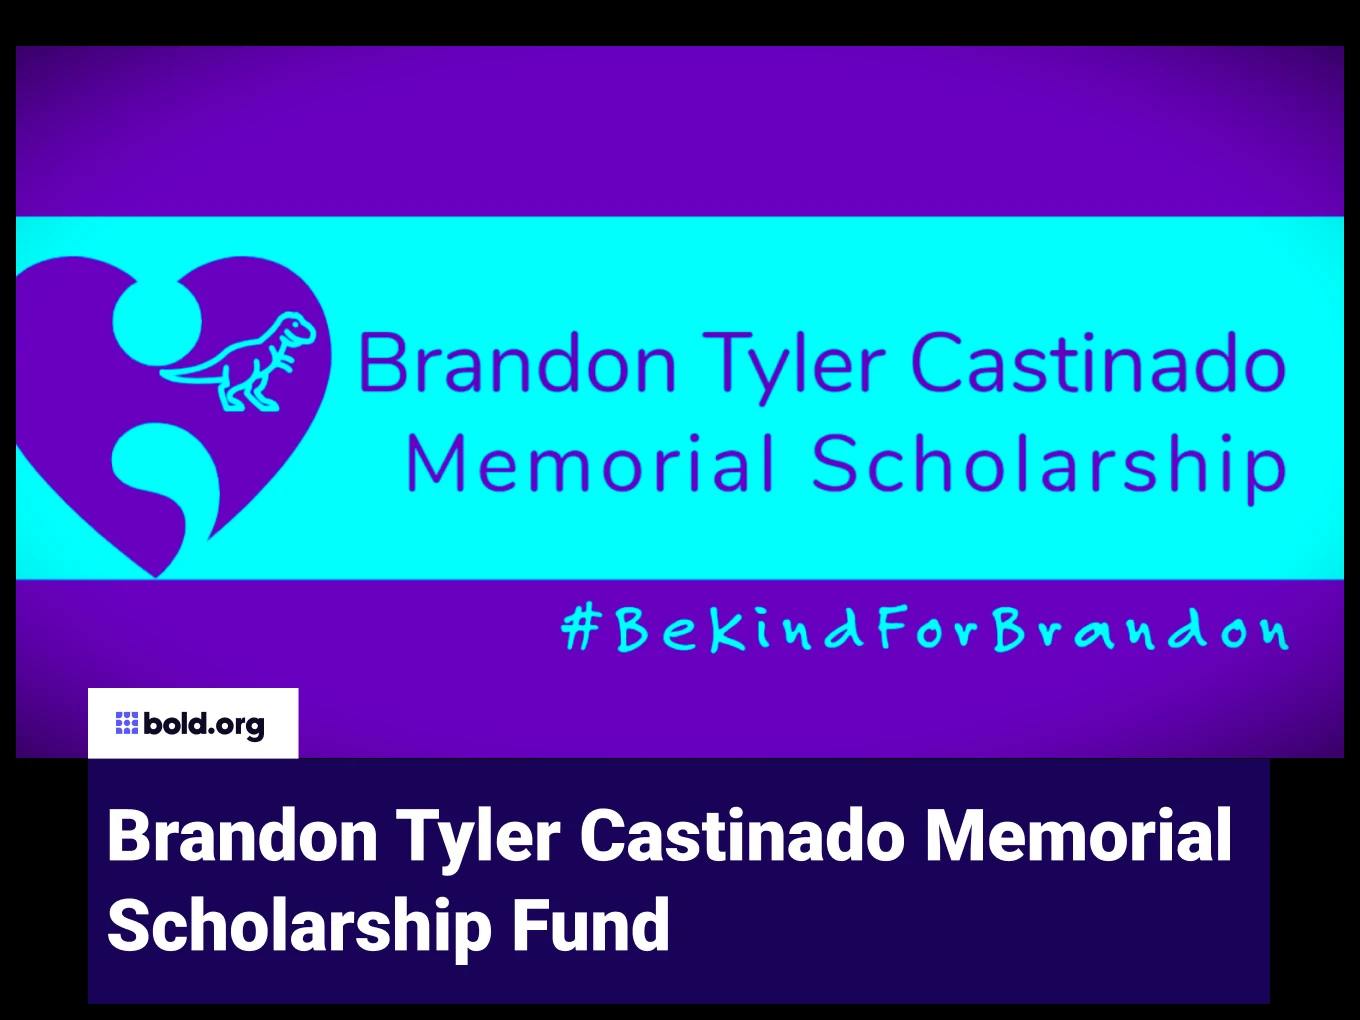 Brandon Tyler Castinado Memorial Scholarship Fund